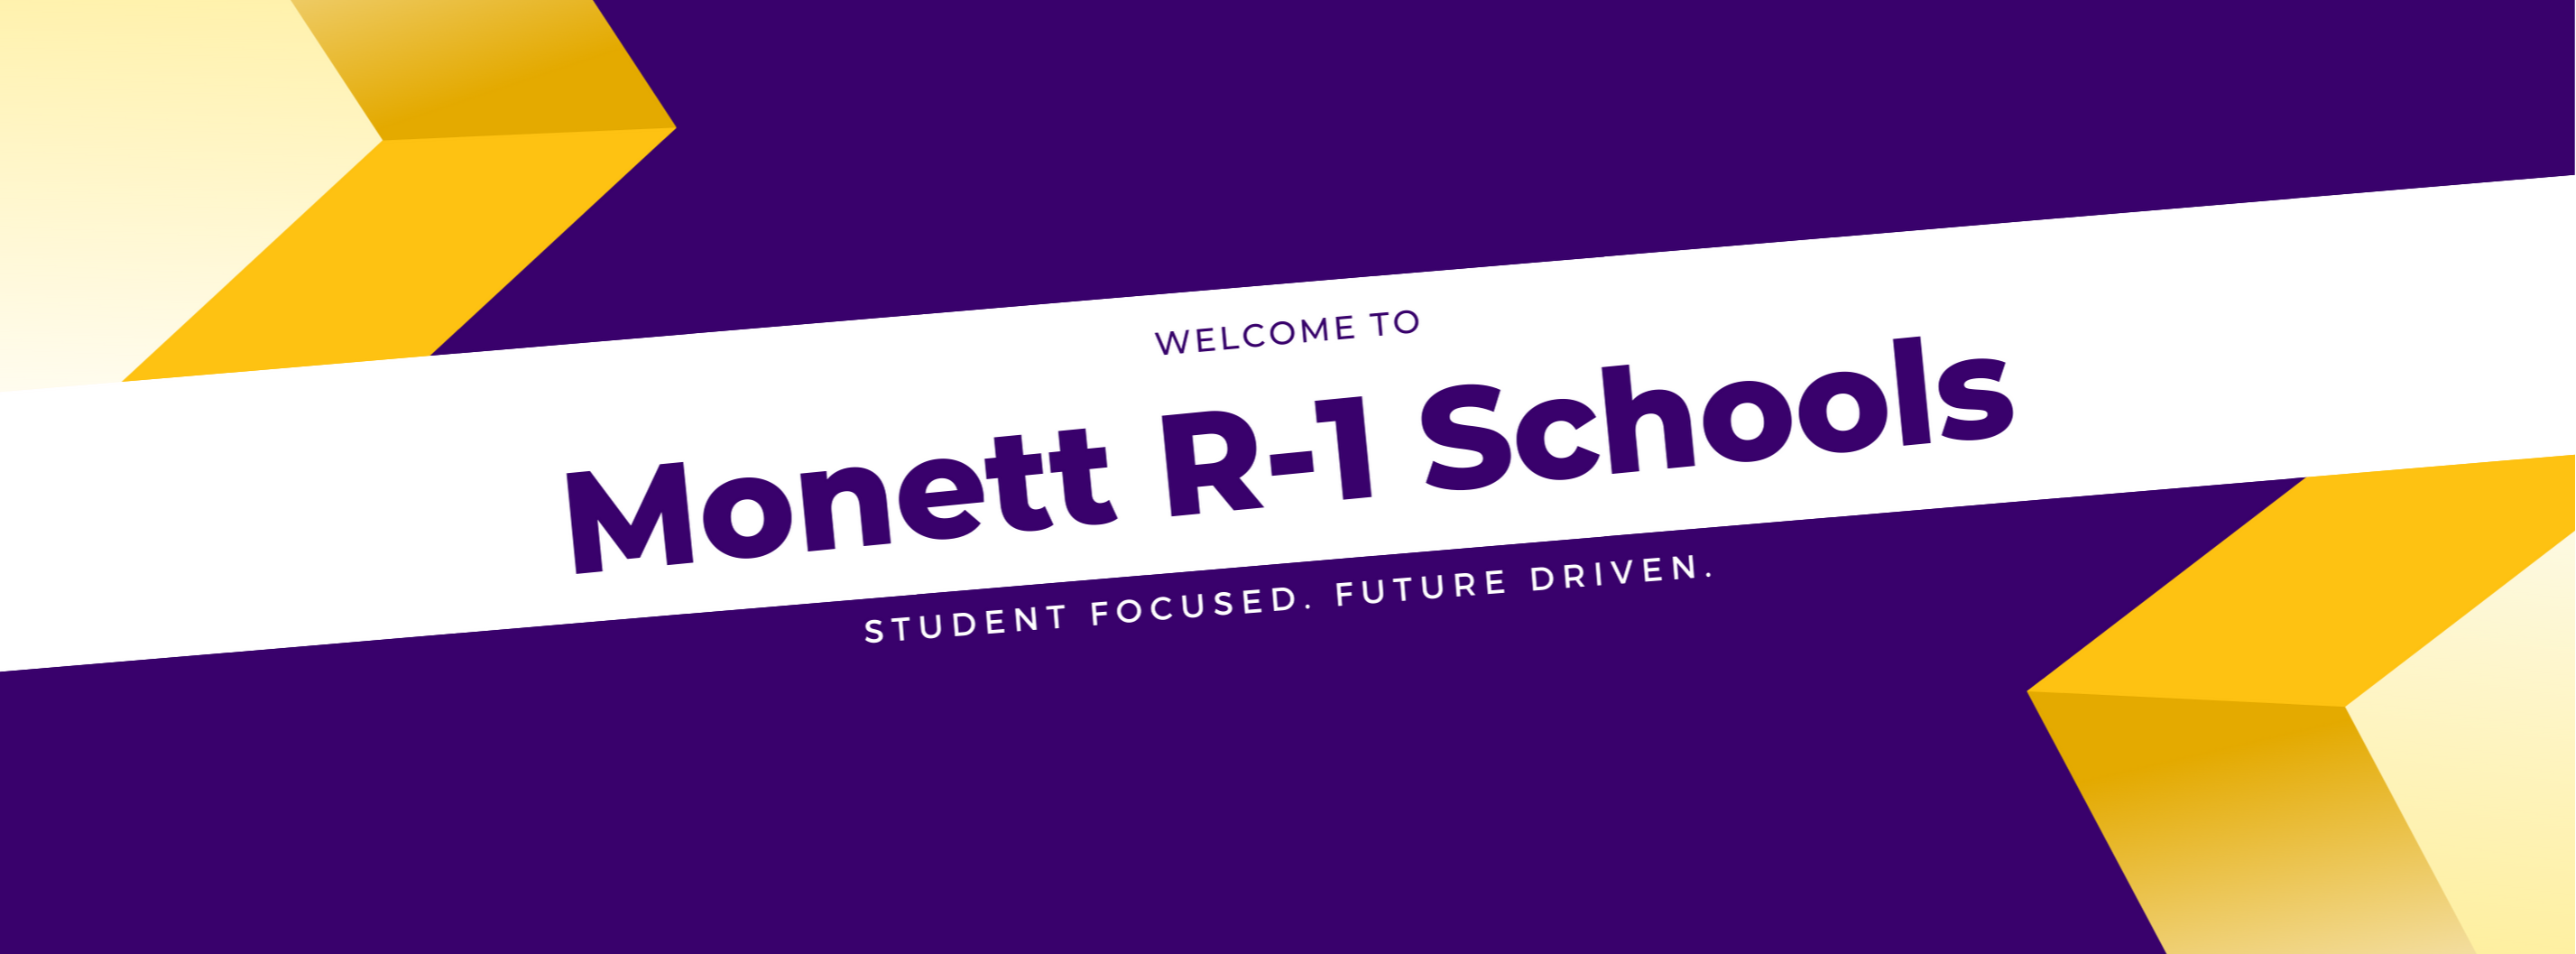 Welcome to Monett R-1 Schools Student Focused. Future Driven. 